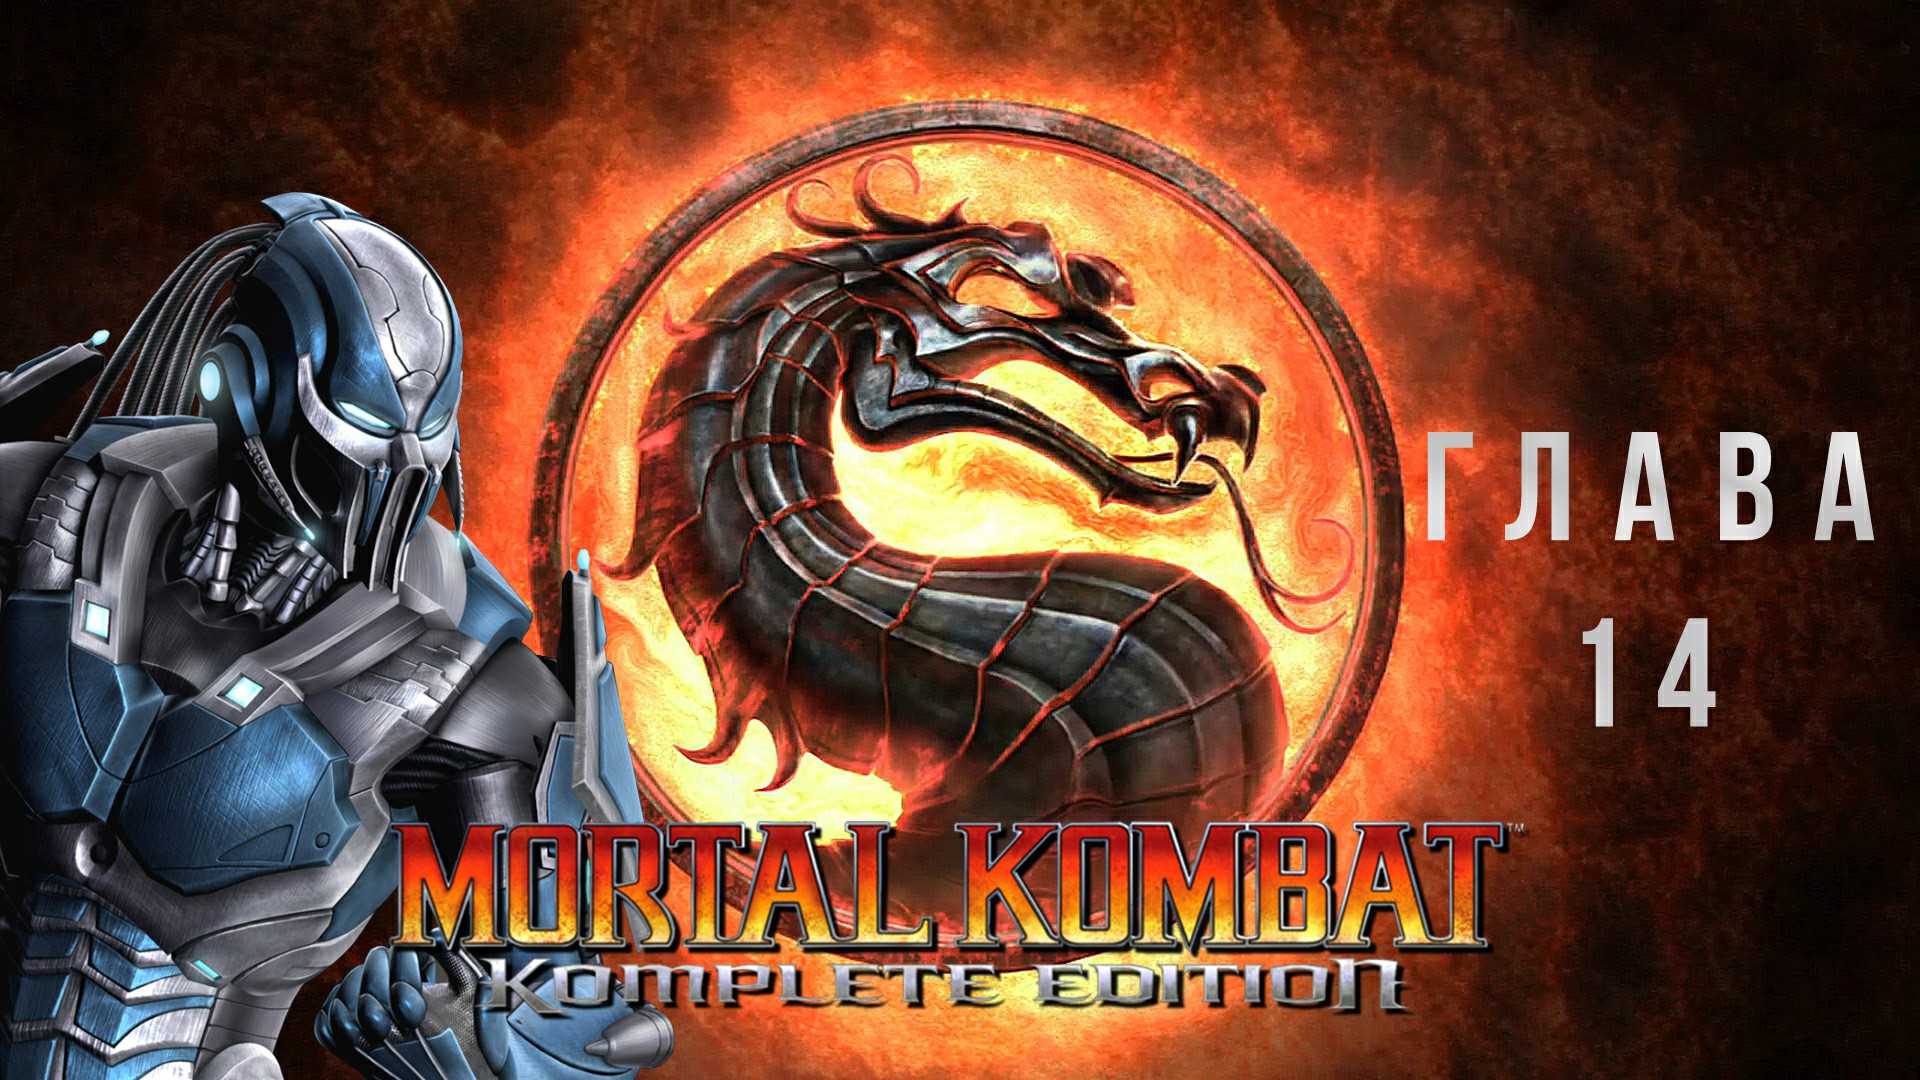 Mortal Kombat Komplete Edition Глава 14 - Cyber Sub-Zero без комментариев